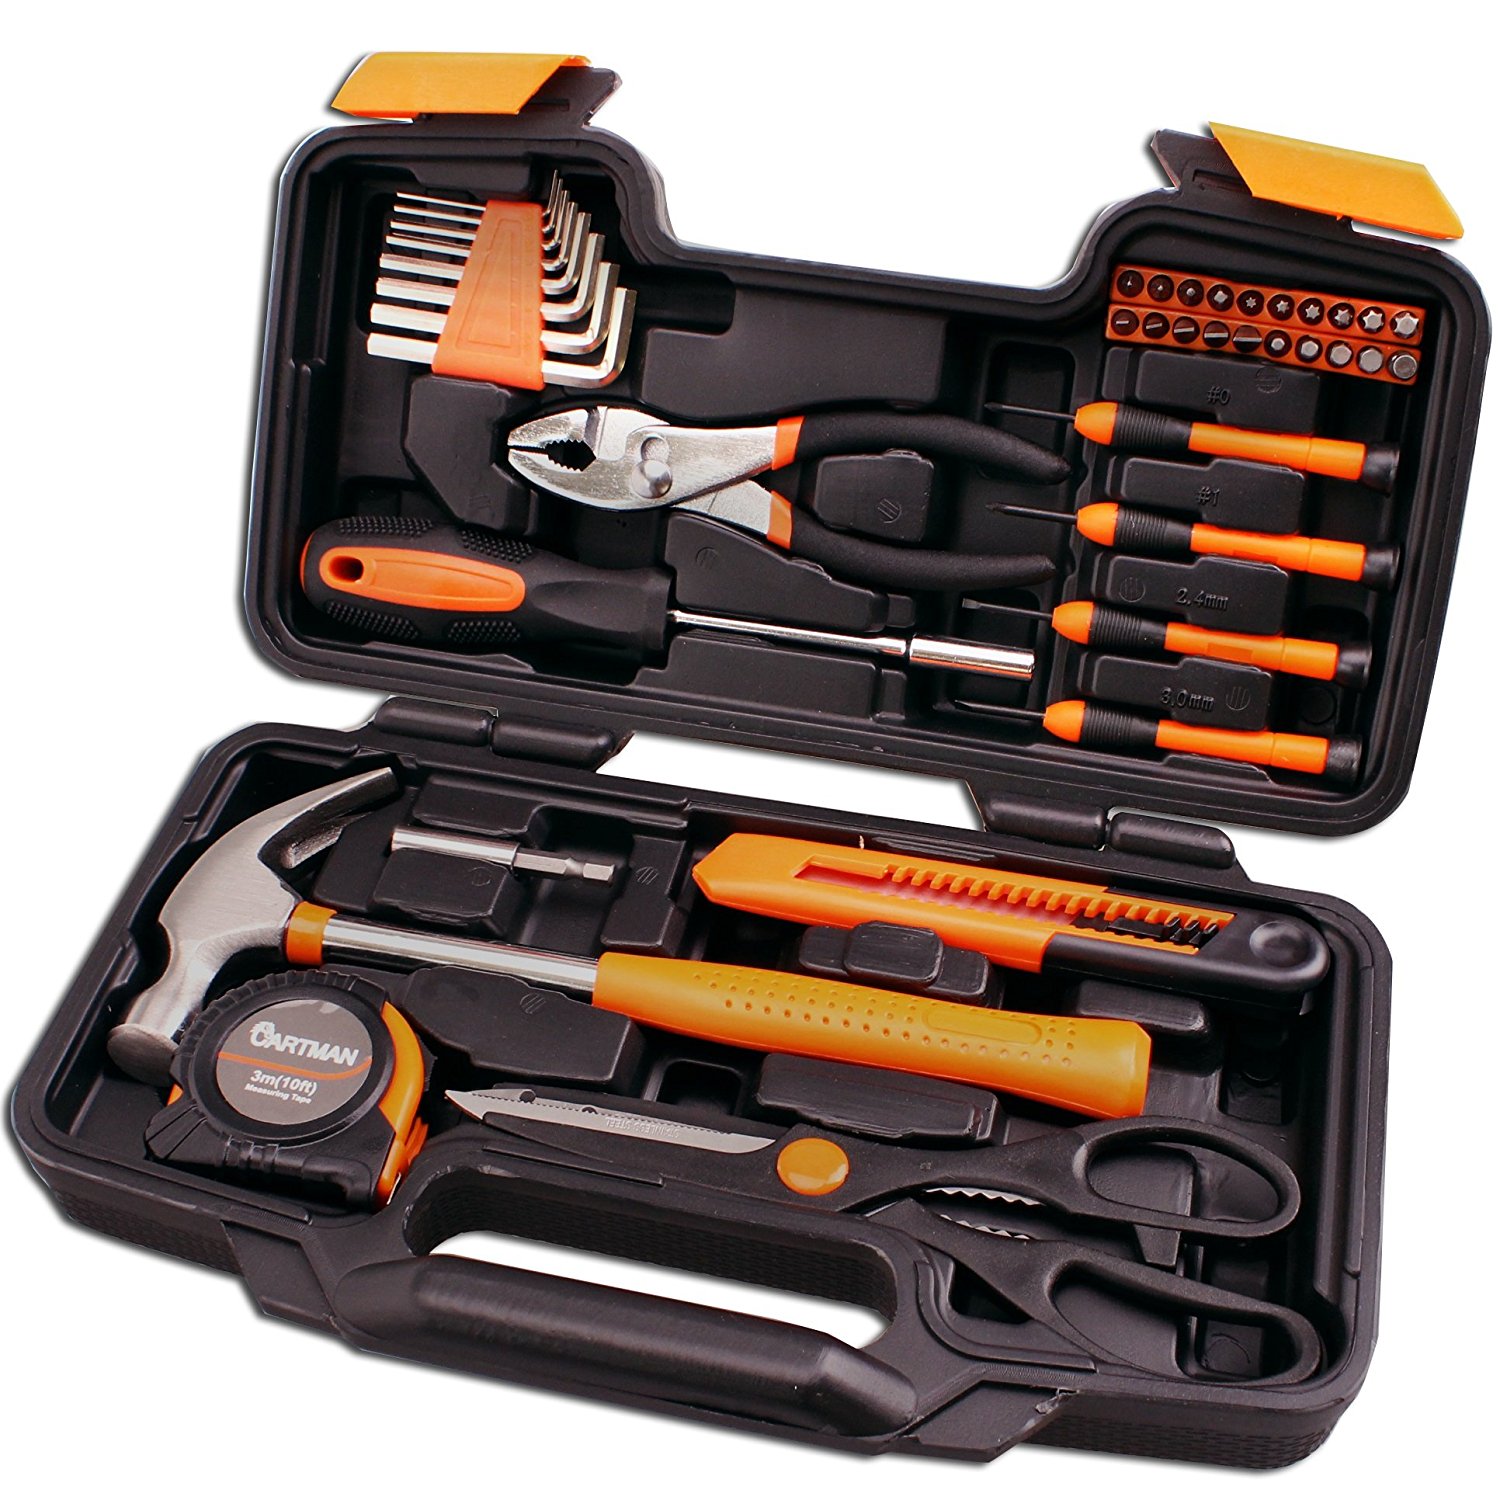 Amazon.com: Cartman Orange 39-Piece Tool Set - General Household ...